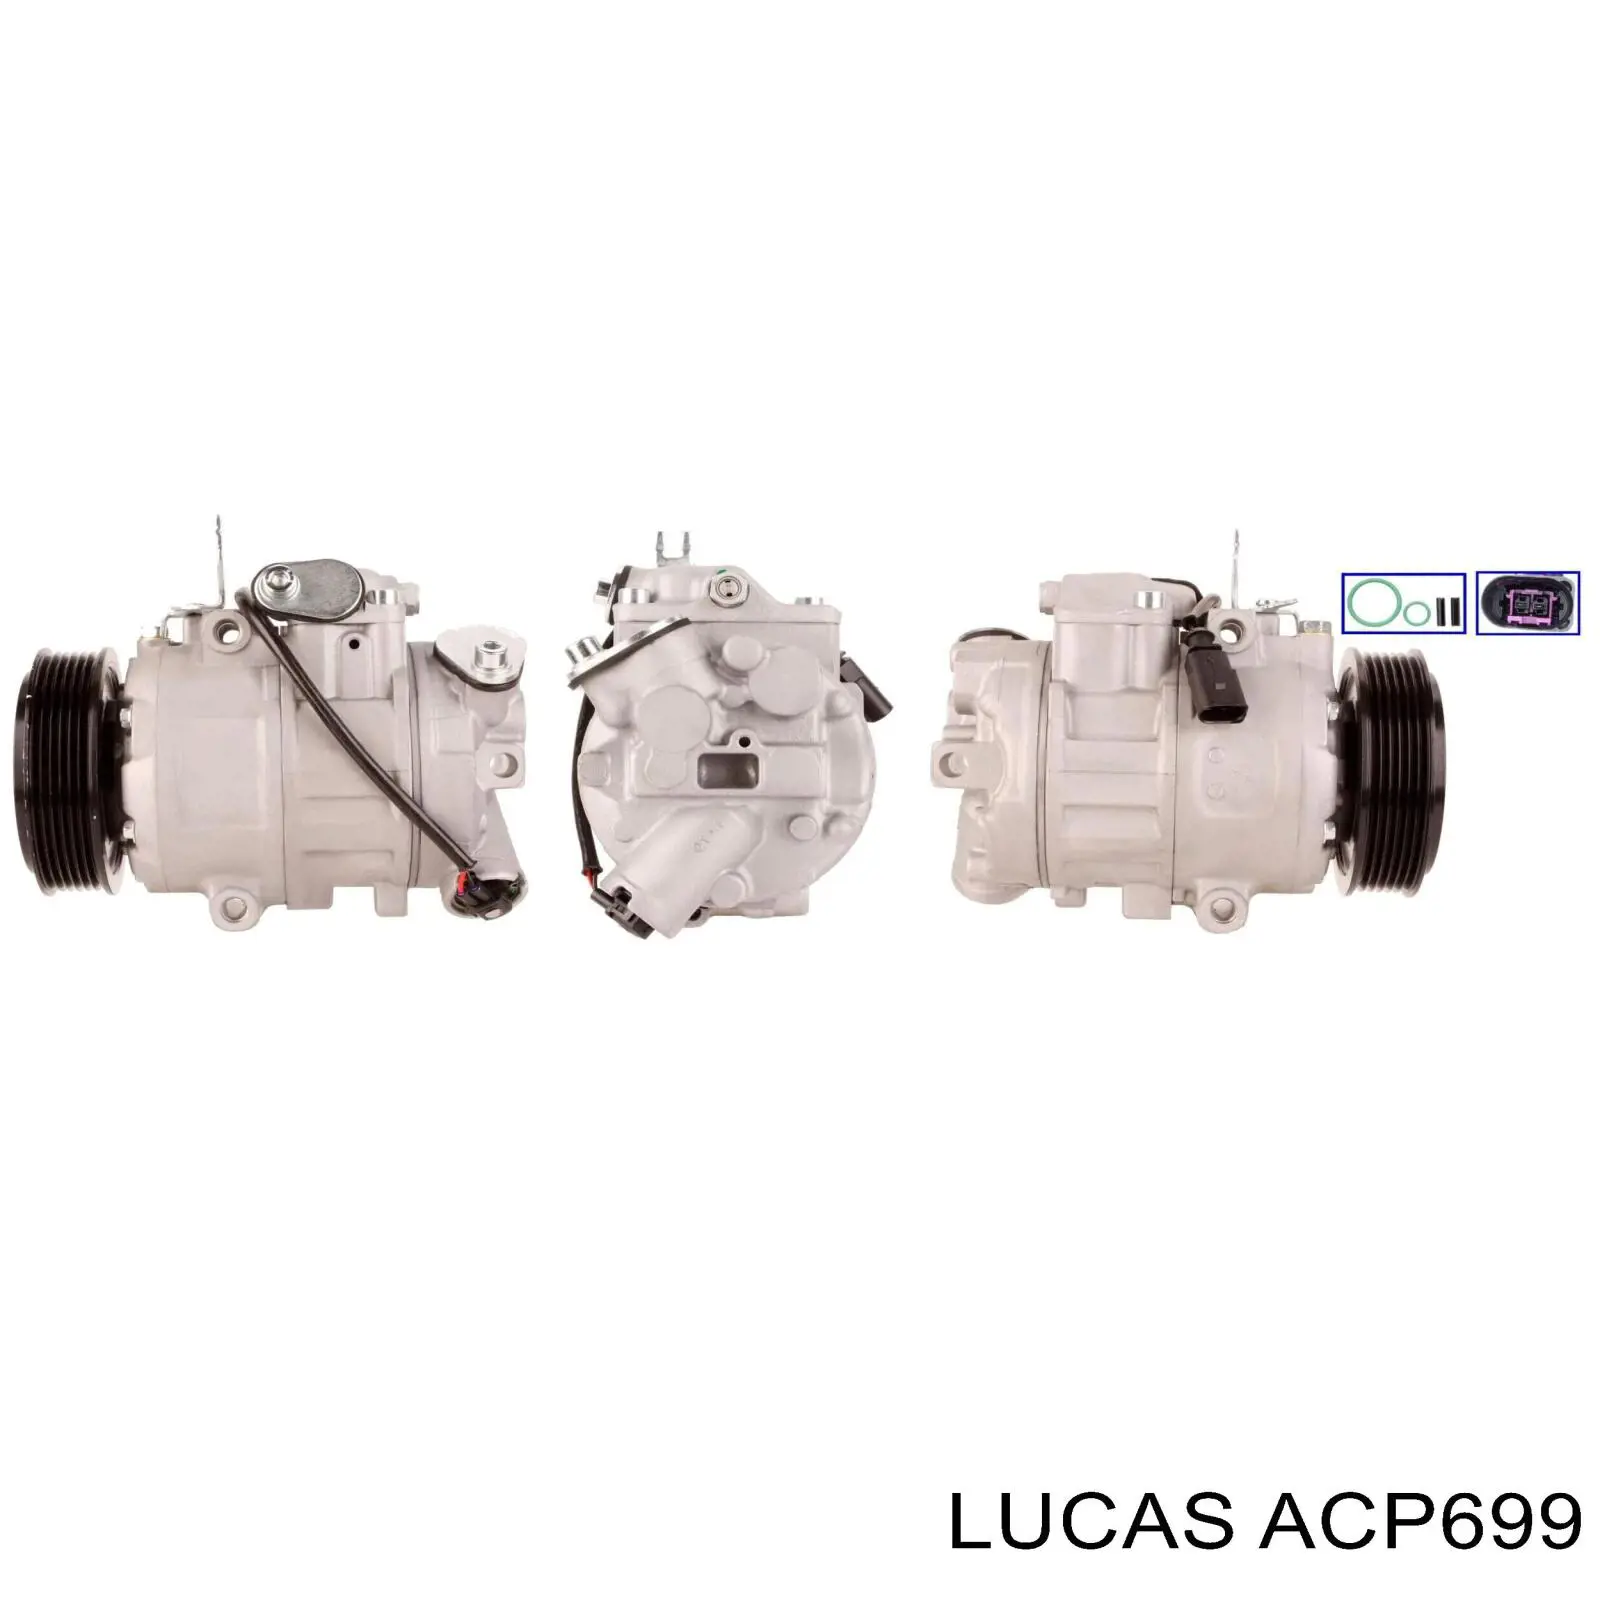 ACP699 Lucas compresor de aire acondicionado